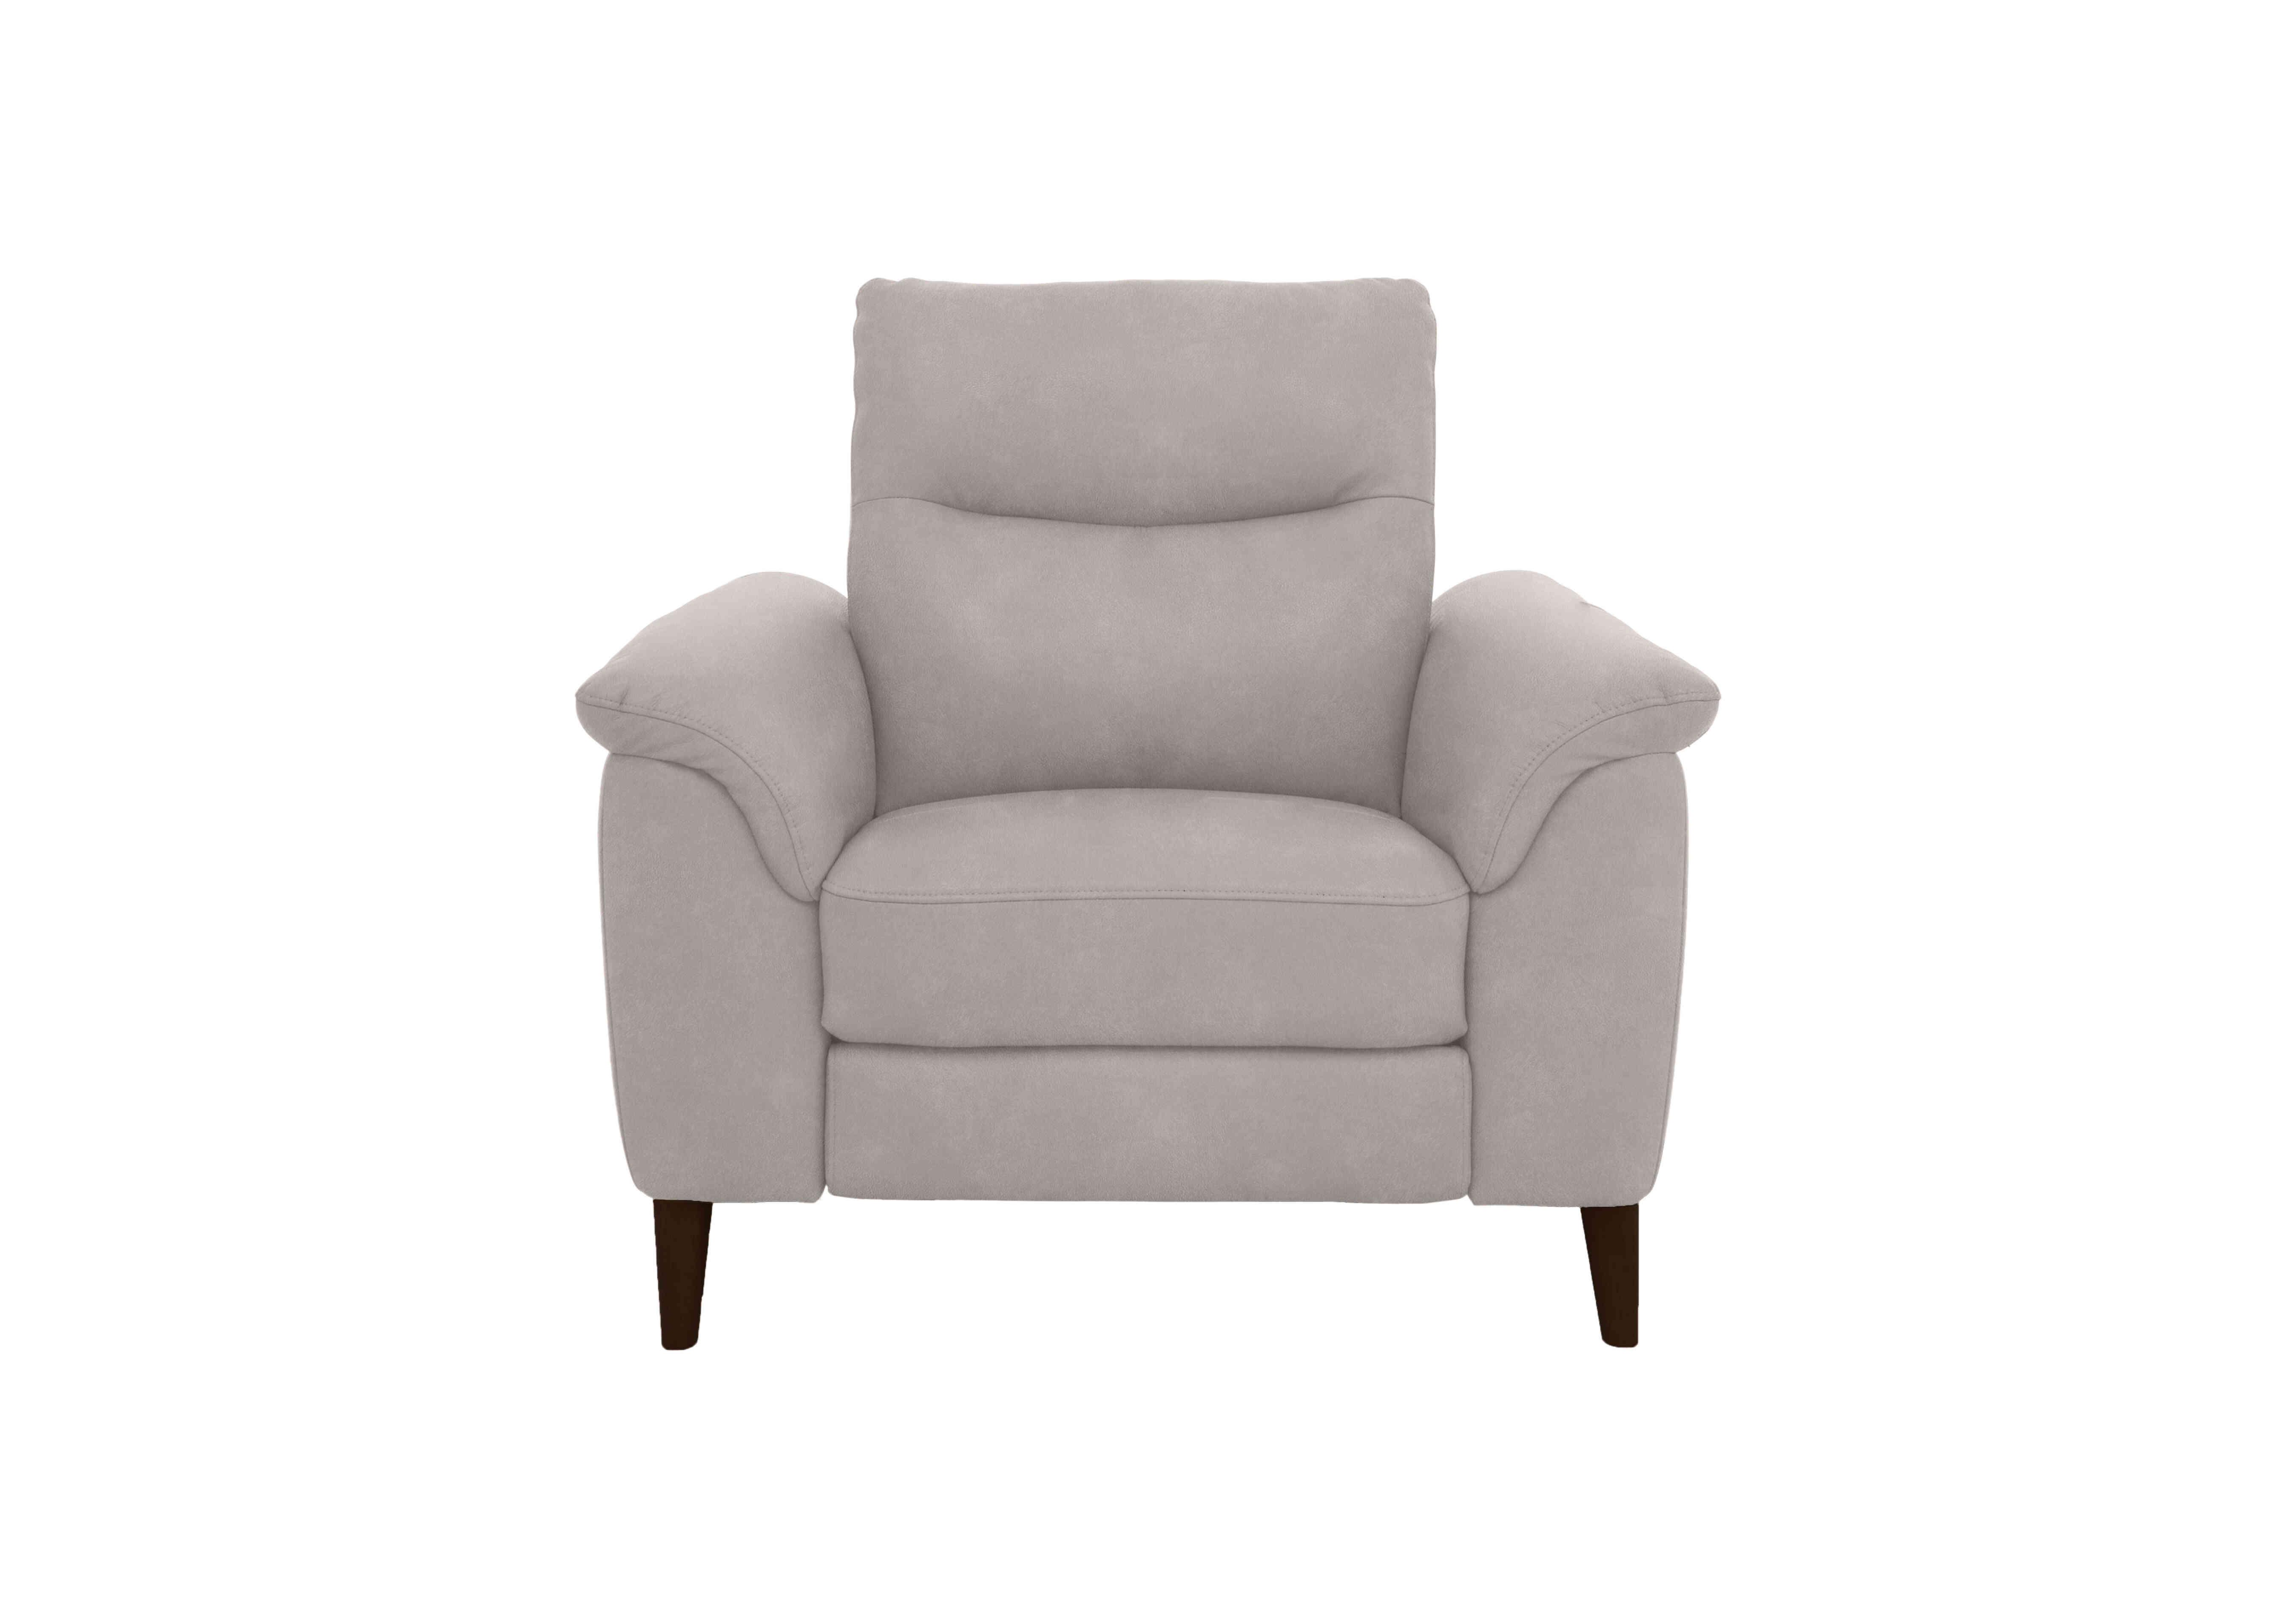 Morgan Fabric Armchair in Stone Dexter 02 43502 on Furniture Village